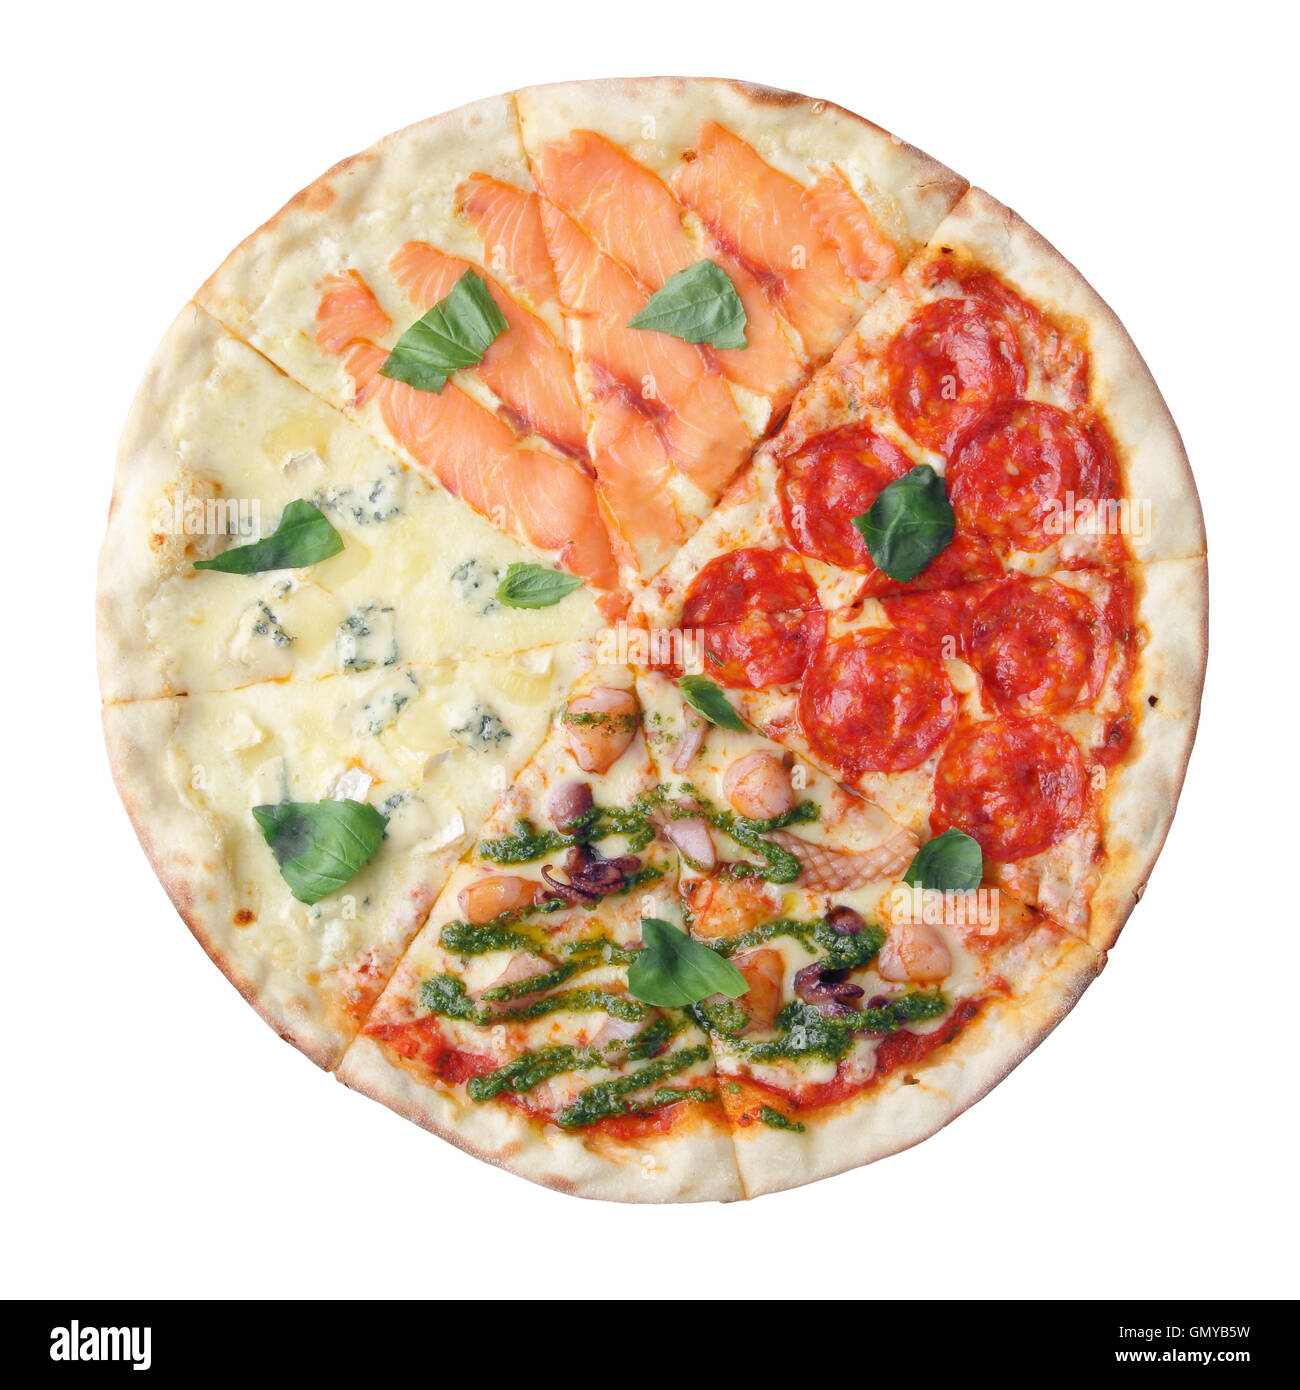 пицца четыре сезона рецепт с фото пошагово фото 91